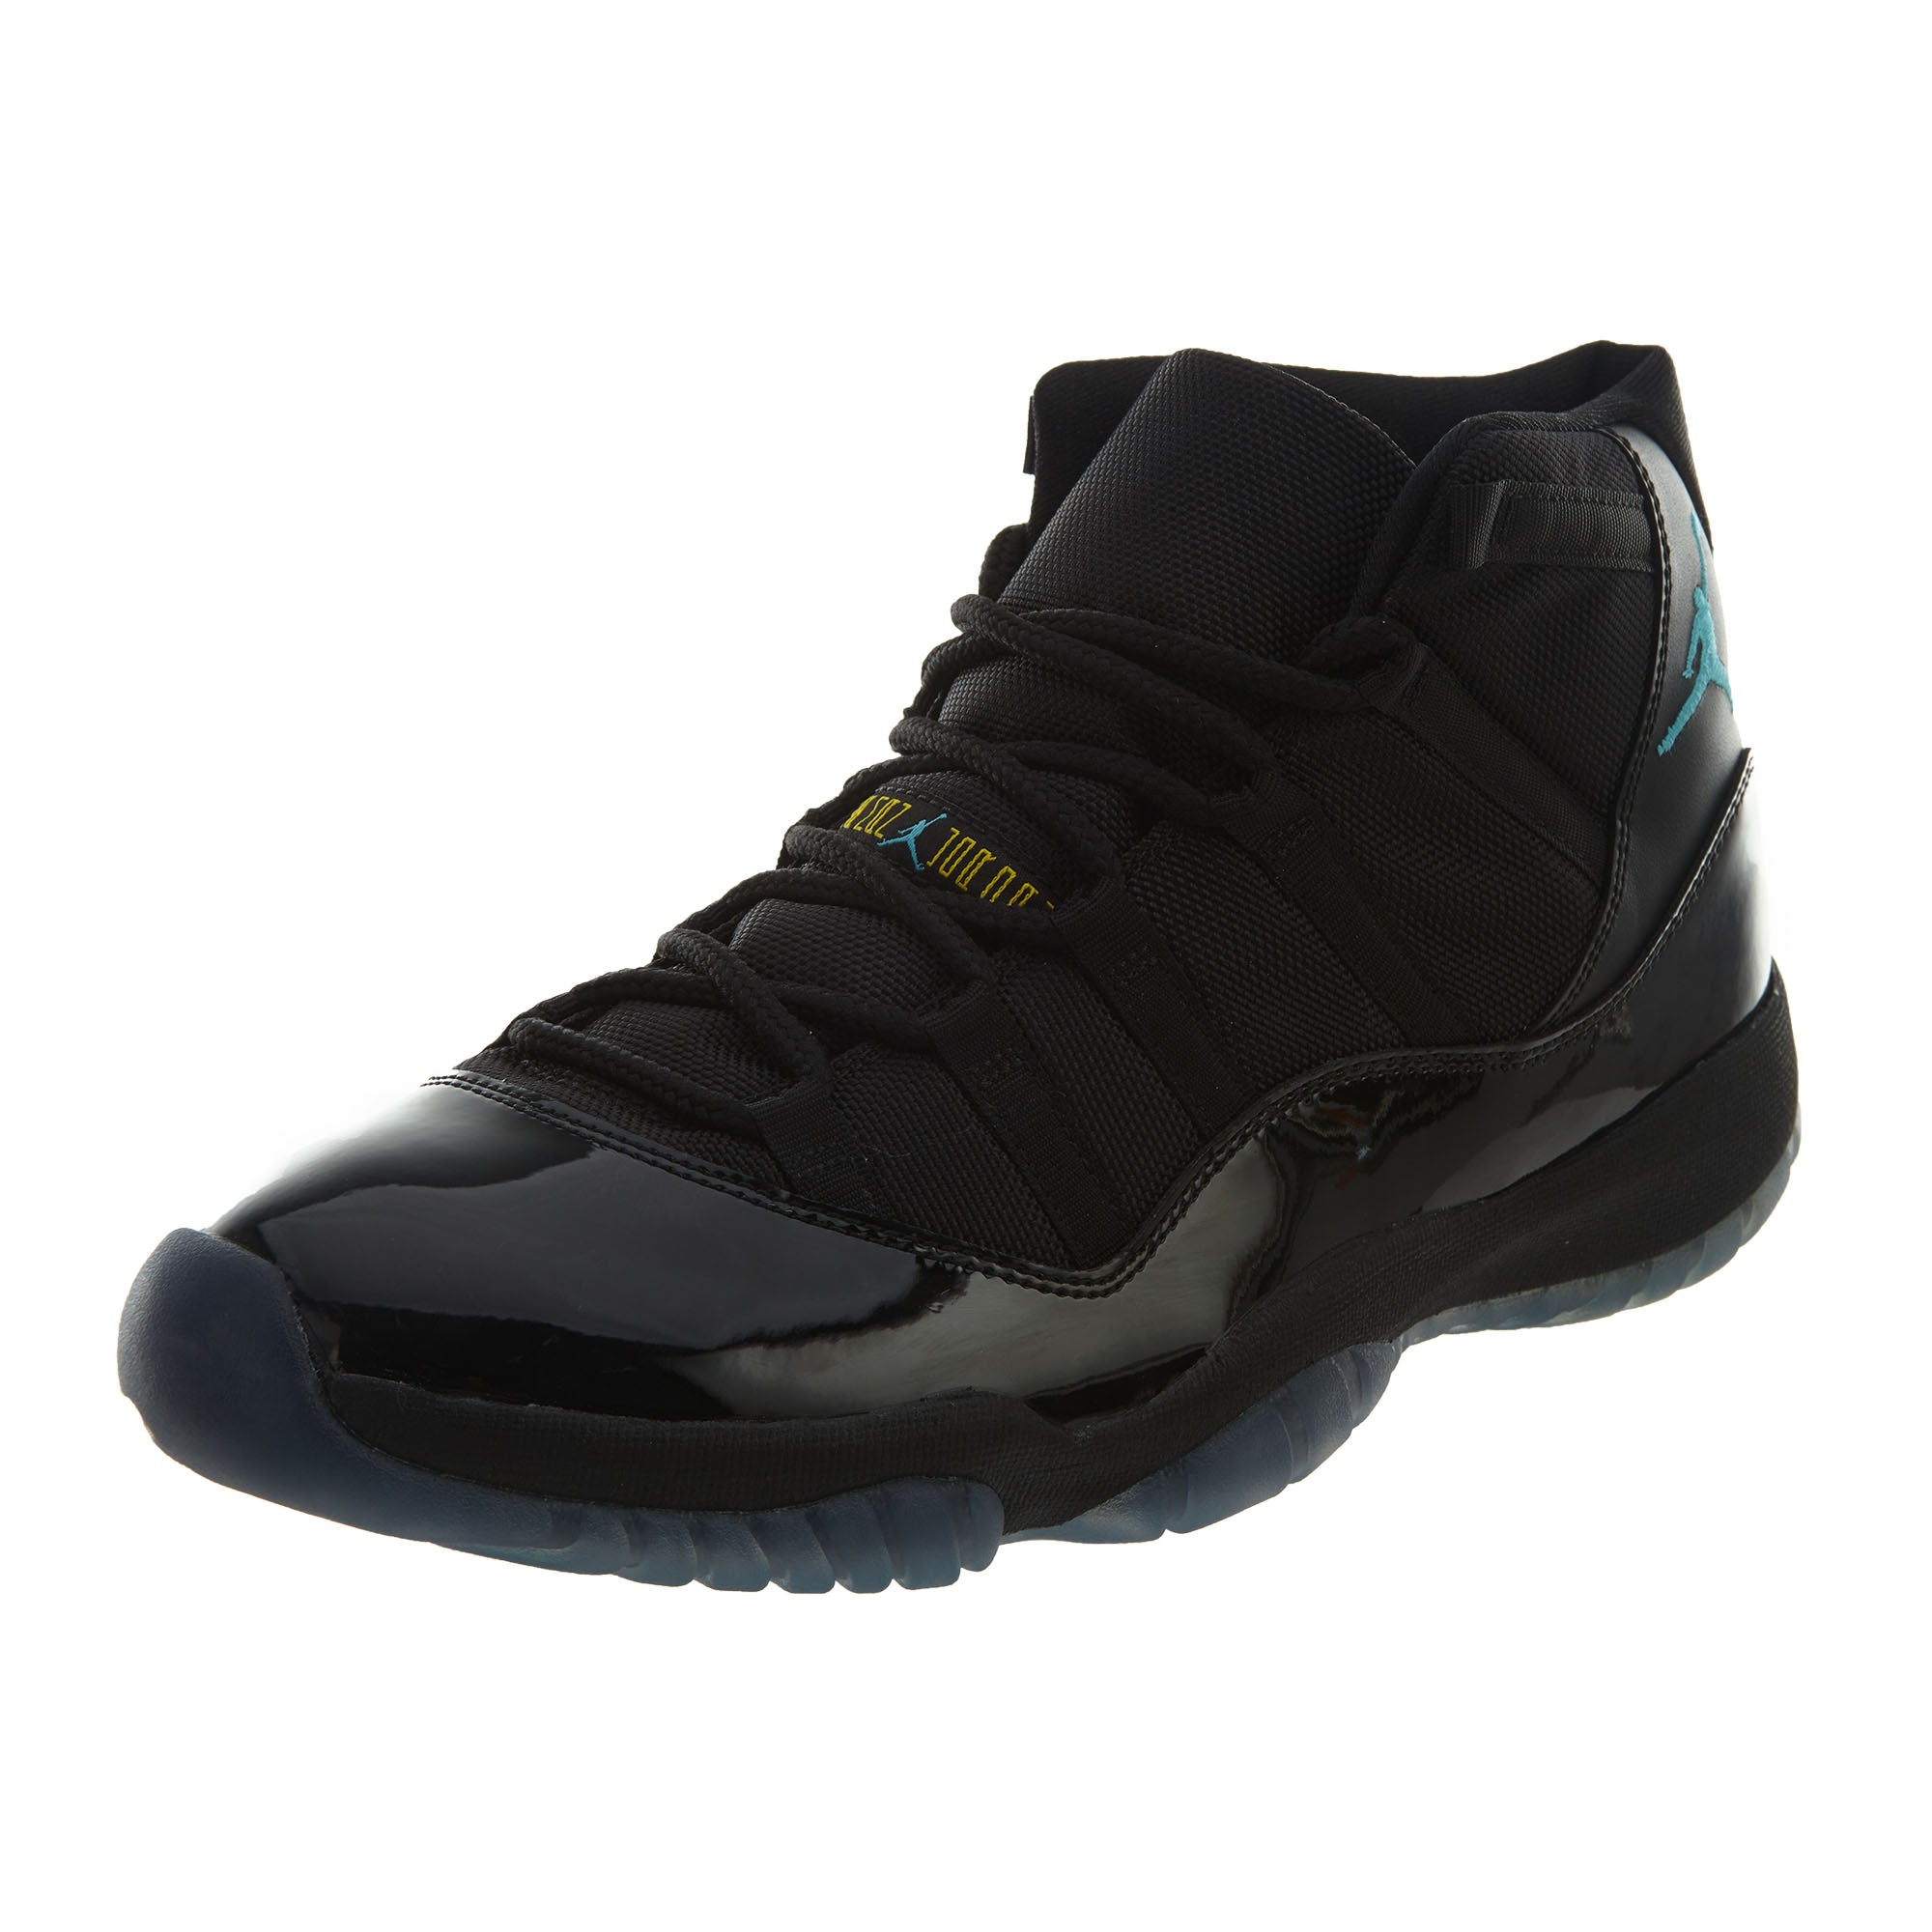 Air Jordan 11 Retro "Gamma Blue Black" Basketball Shoes Men's Style #378037-006